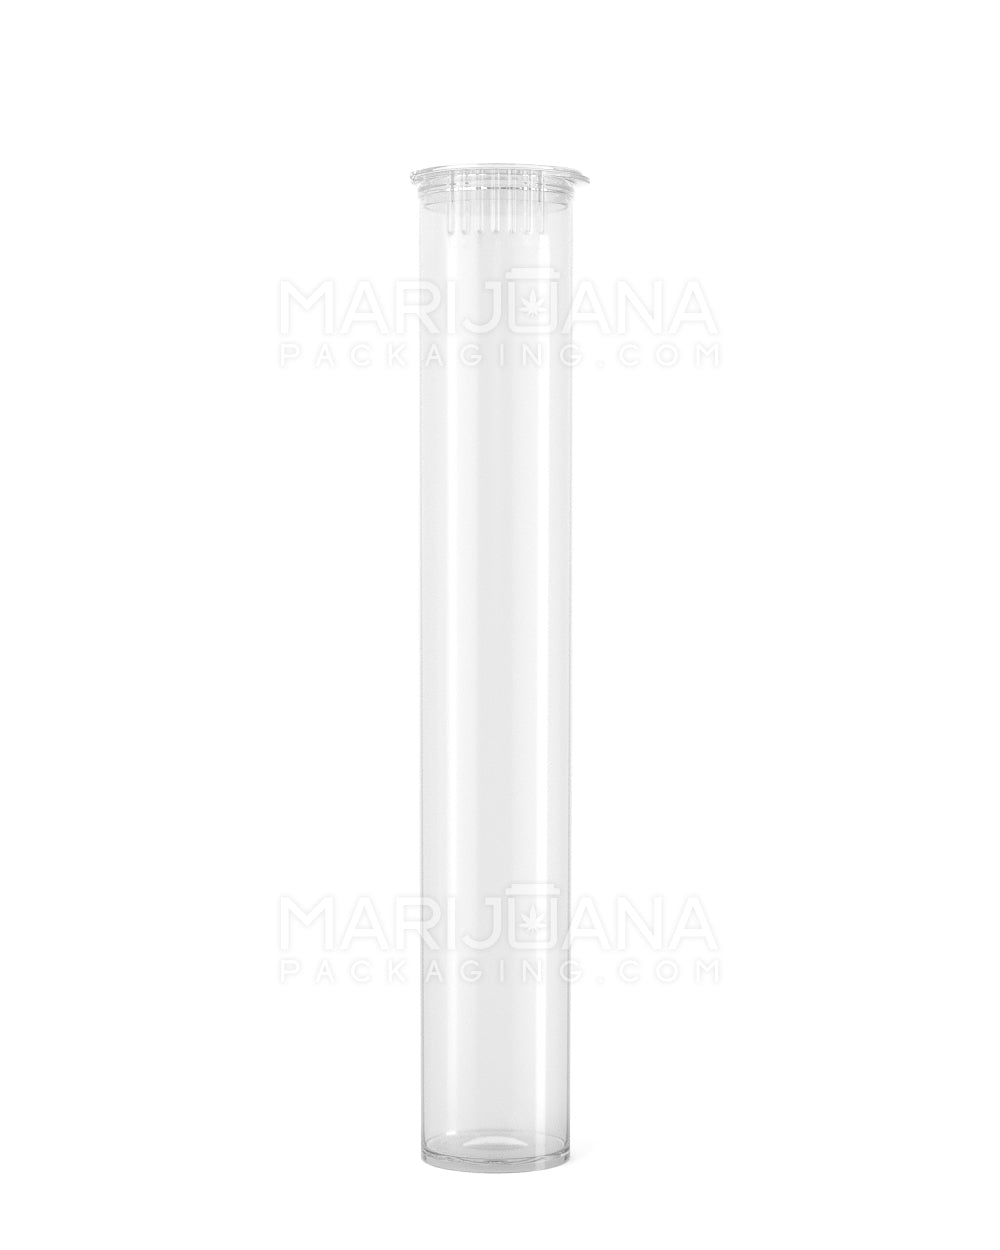 POLLEN GEAR | Child Resistant Pop Top Plastic Snap Cap Pre-Roll Tubes | 116mm - Clear - 1008 Count - 3